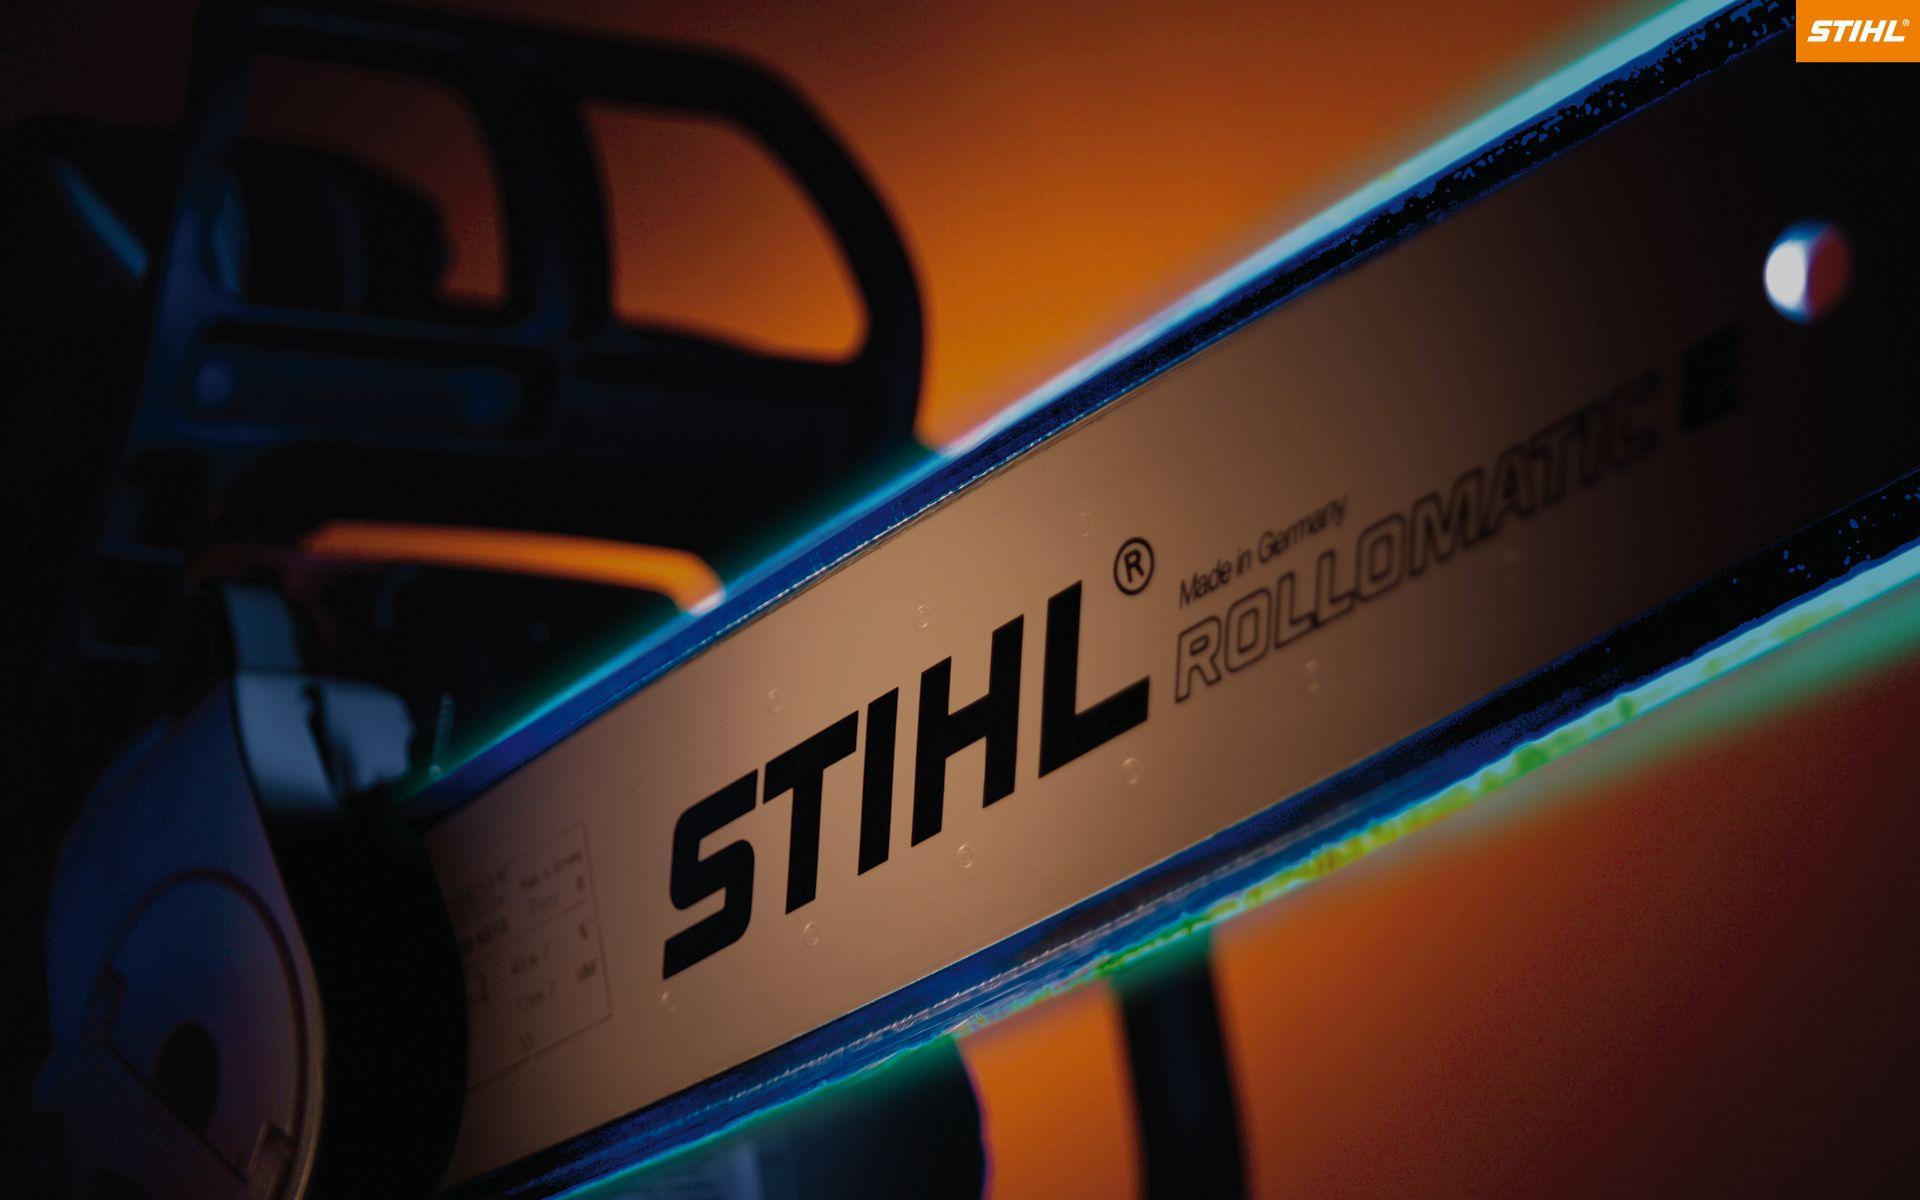 Stihl Logo - Our Wallpaper for more STIHL on your screen | STIHL | STIHL